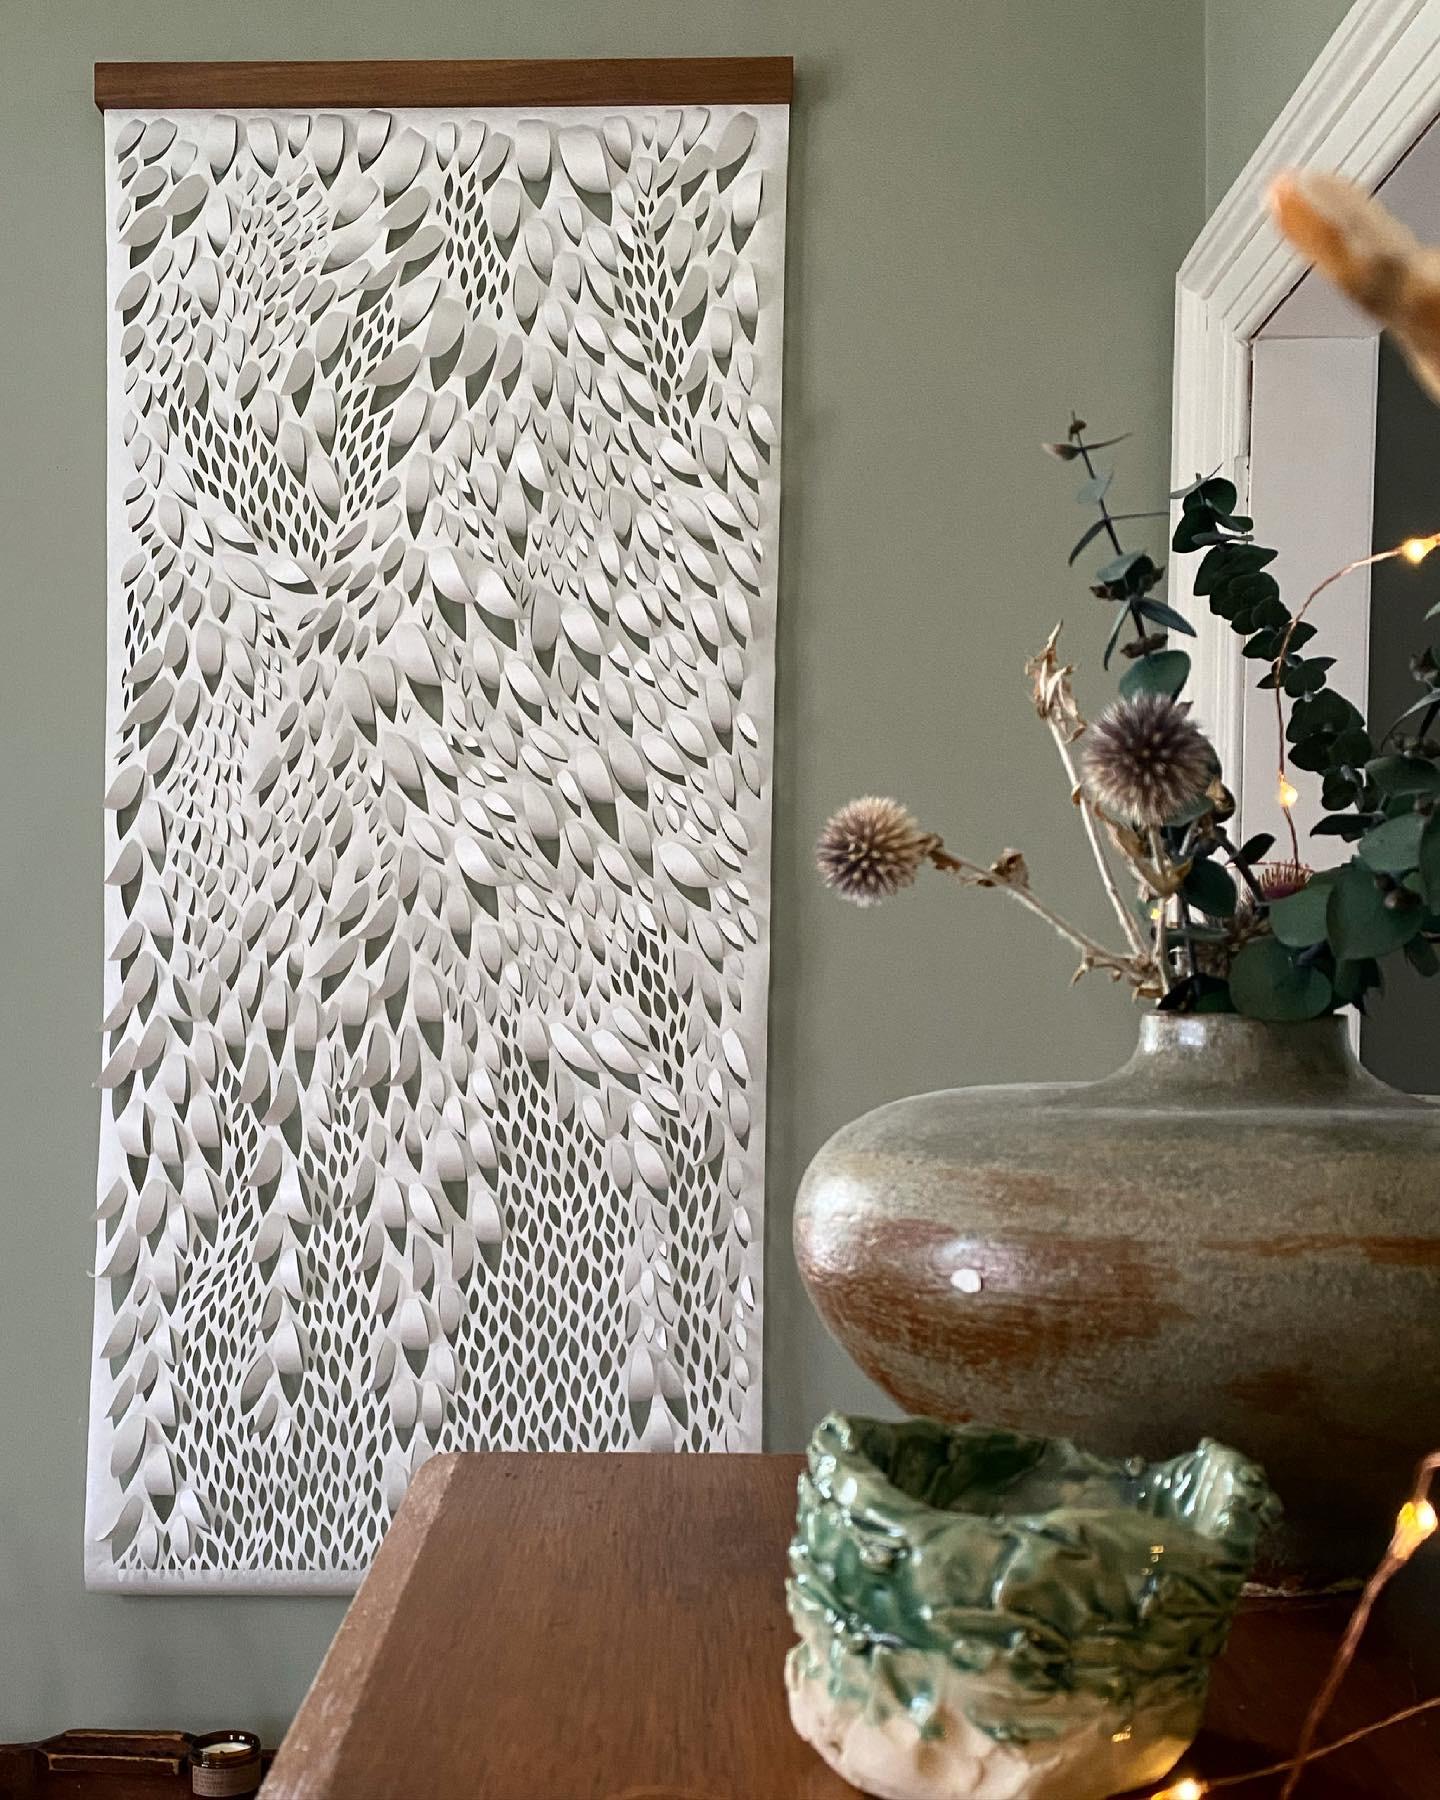 Hand-cut Paper Scroll Edge , Sculptural Wall Hangings 60x36 - Contemporary Mixed Media Art by Summer J. Hart